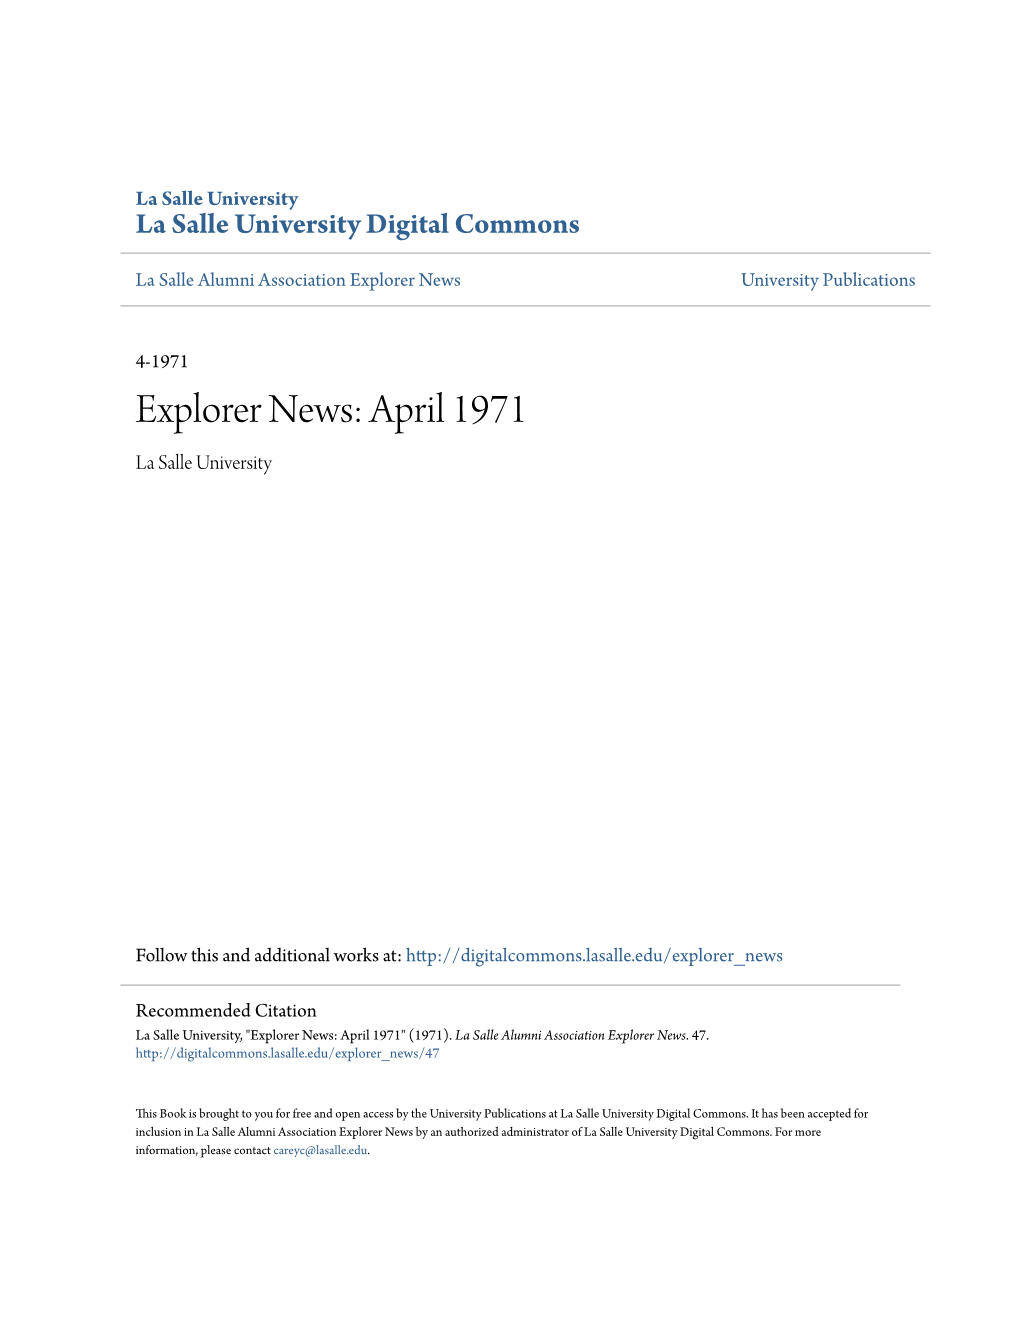 Explorer News: April 1971 La Salle University